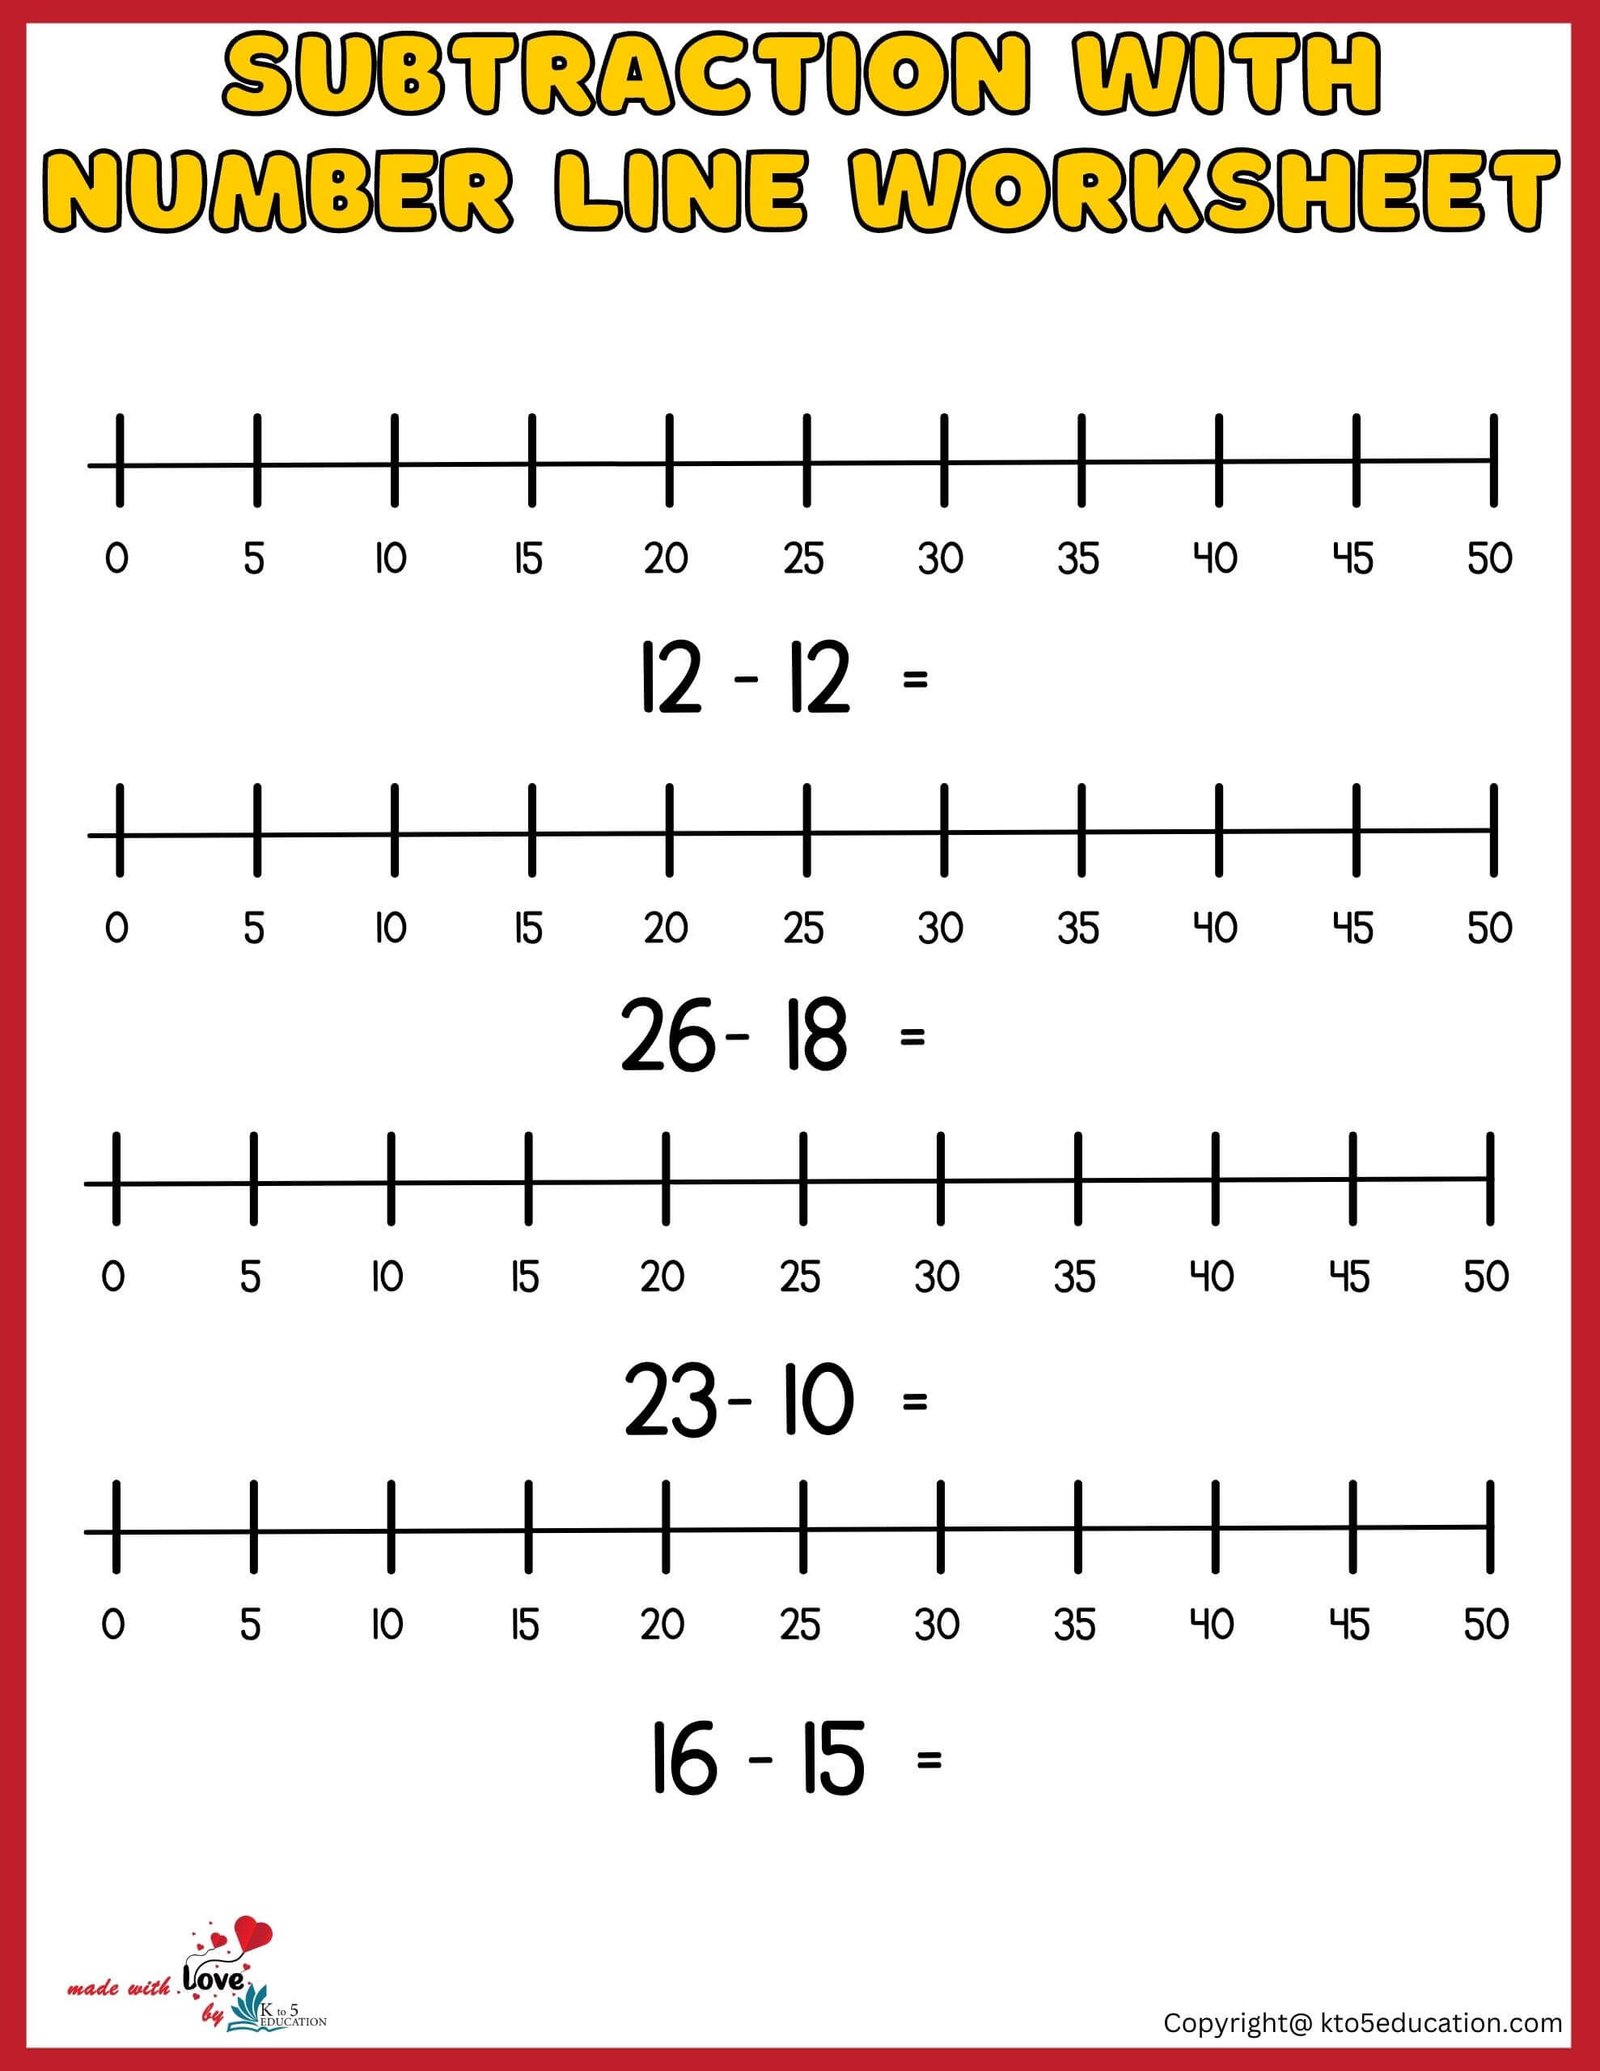 Subtraction With Number Line Worksheet For Kids 1-50